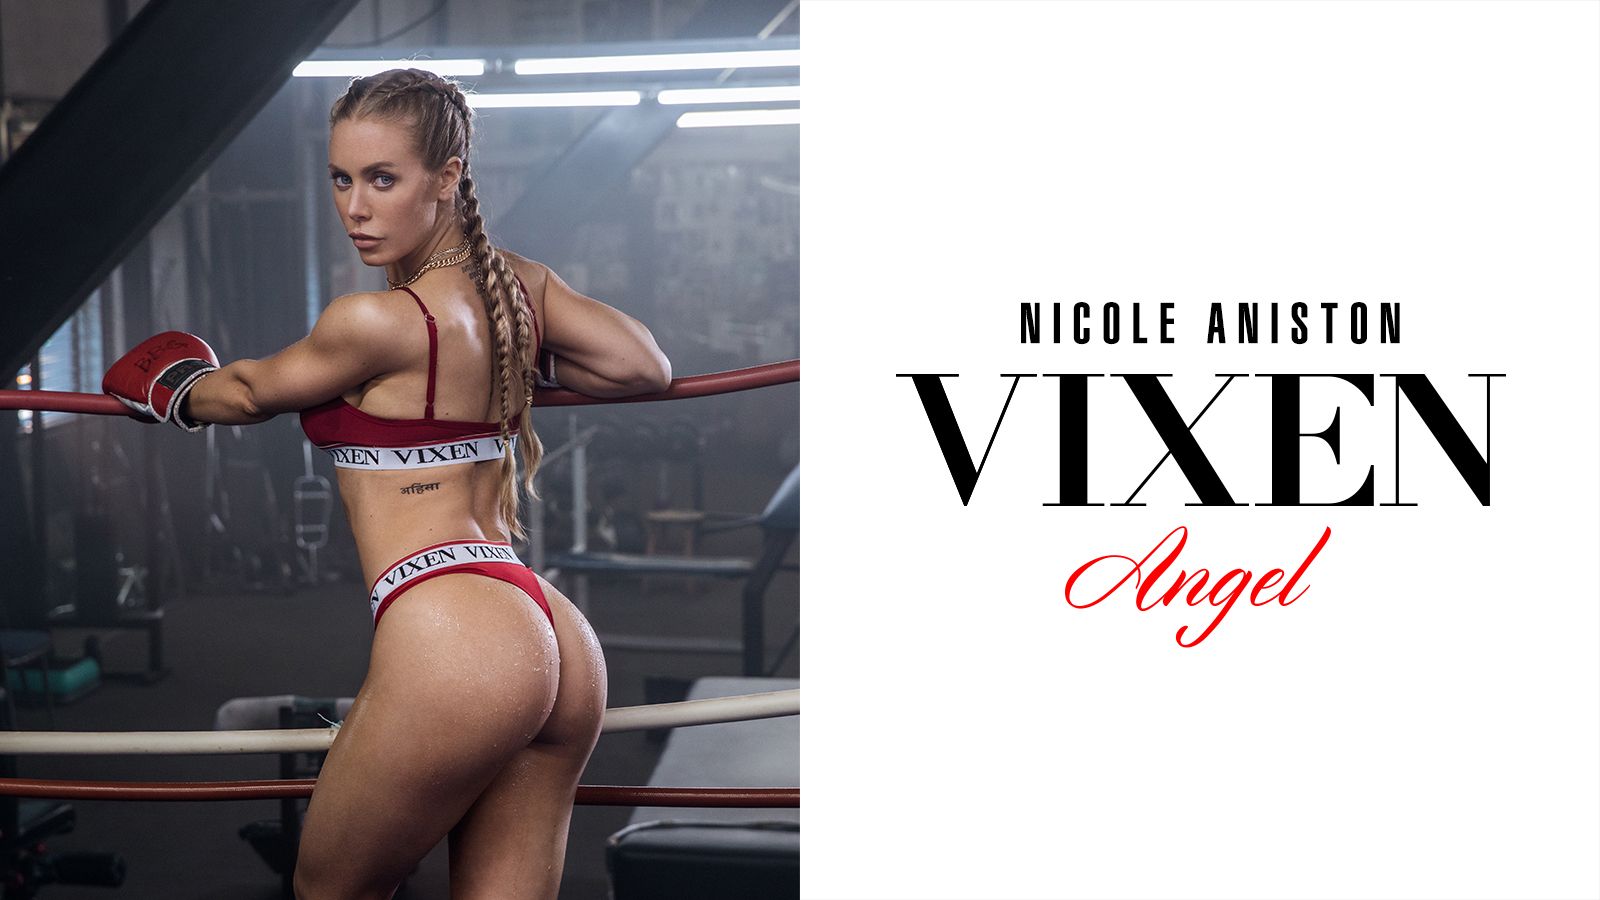 Nicole Aniston Chosen As The New Vixen Angel